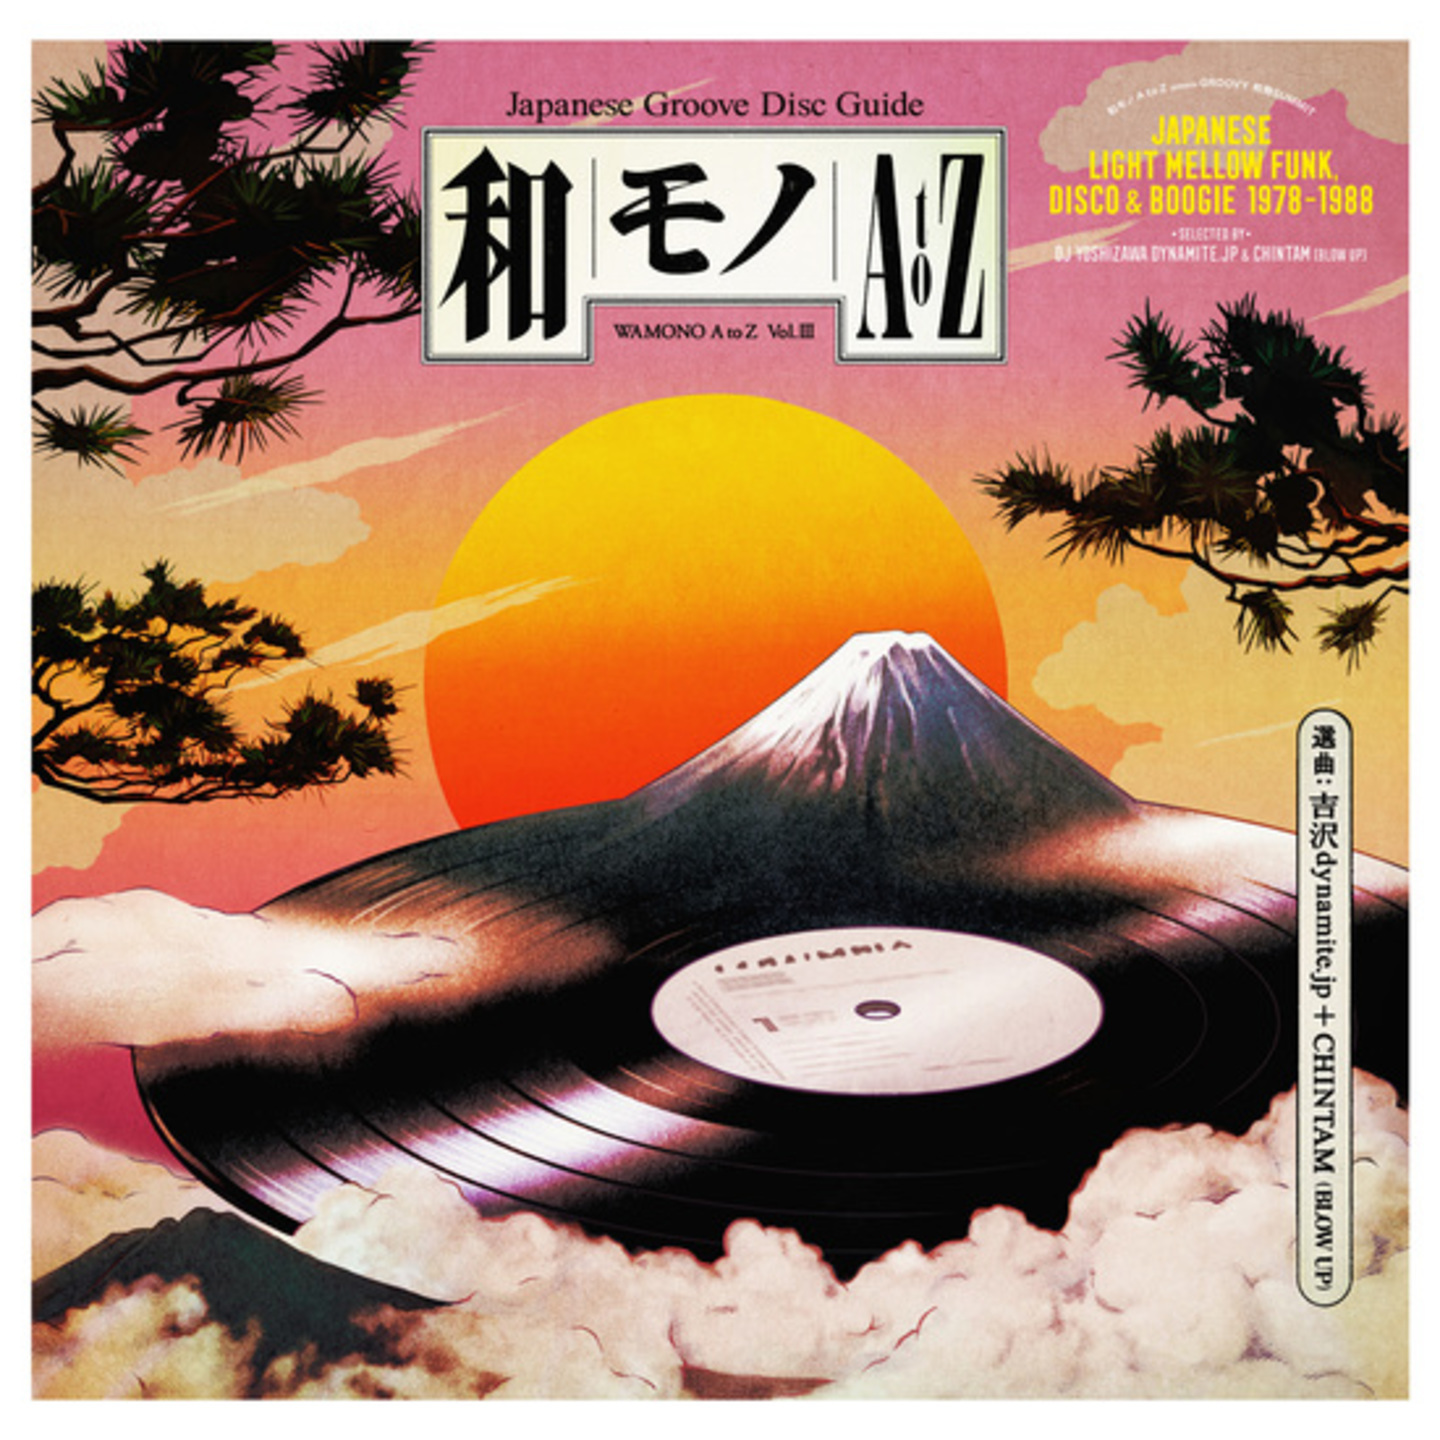 VA - Wamono A to Z Vol III Japanese Light Mellow Funk, Disco & Boogie 1978-1988 LP 180gram vinyl